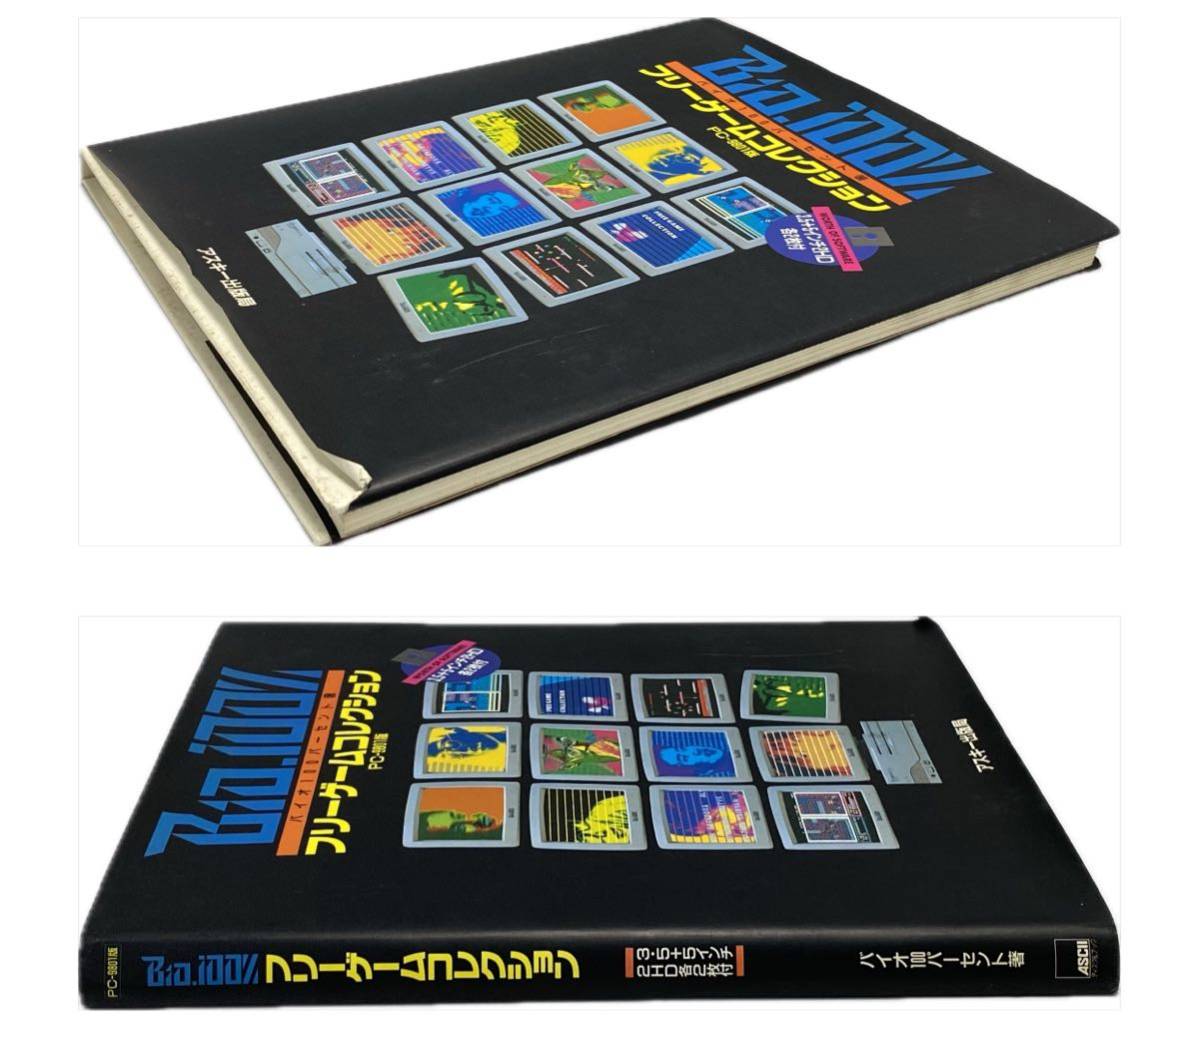 AZ-984 アスキー PC-9801版 Bio_100% フリーゲームコレクション フロッピーディスク 未開封品 1992年12月25日 初版 希少 ビンテージ PC-98 _画像9